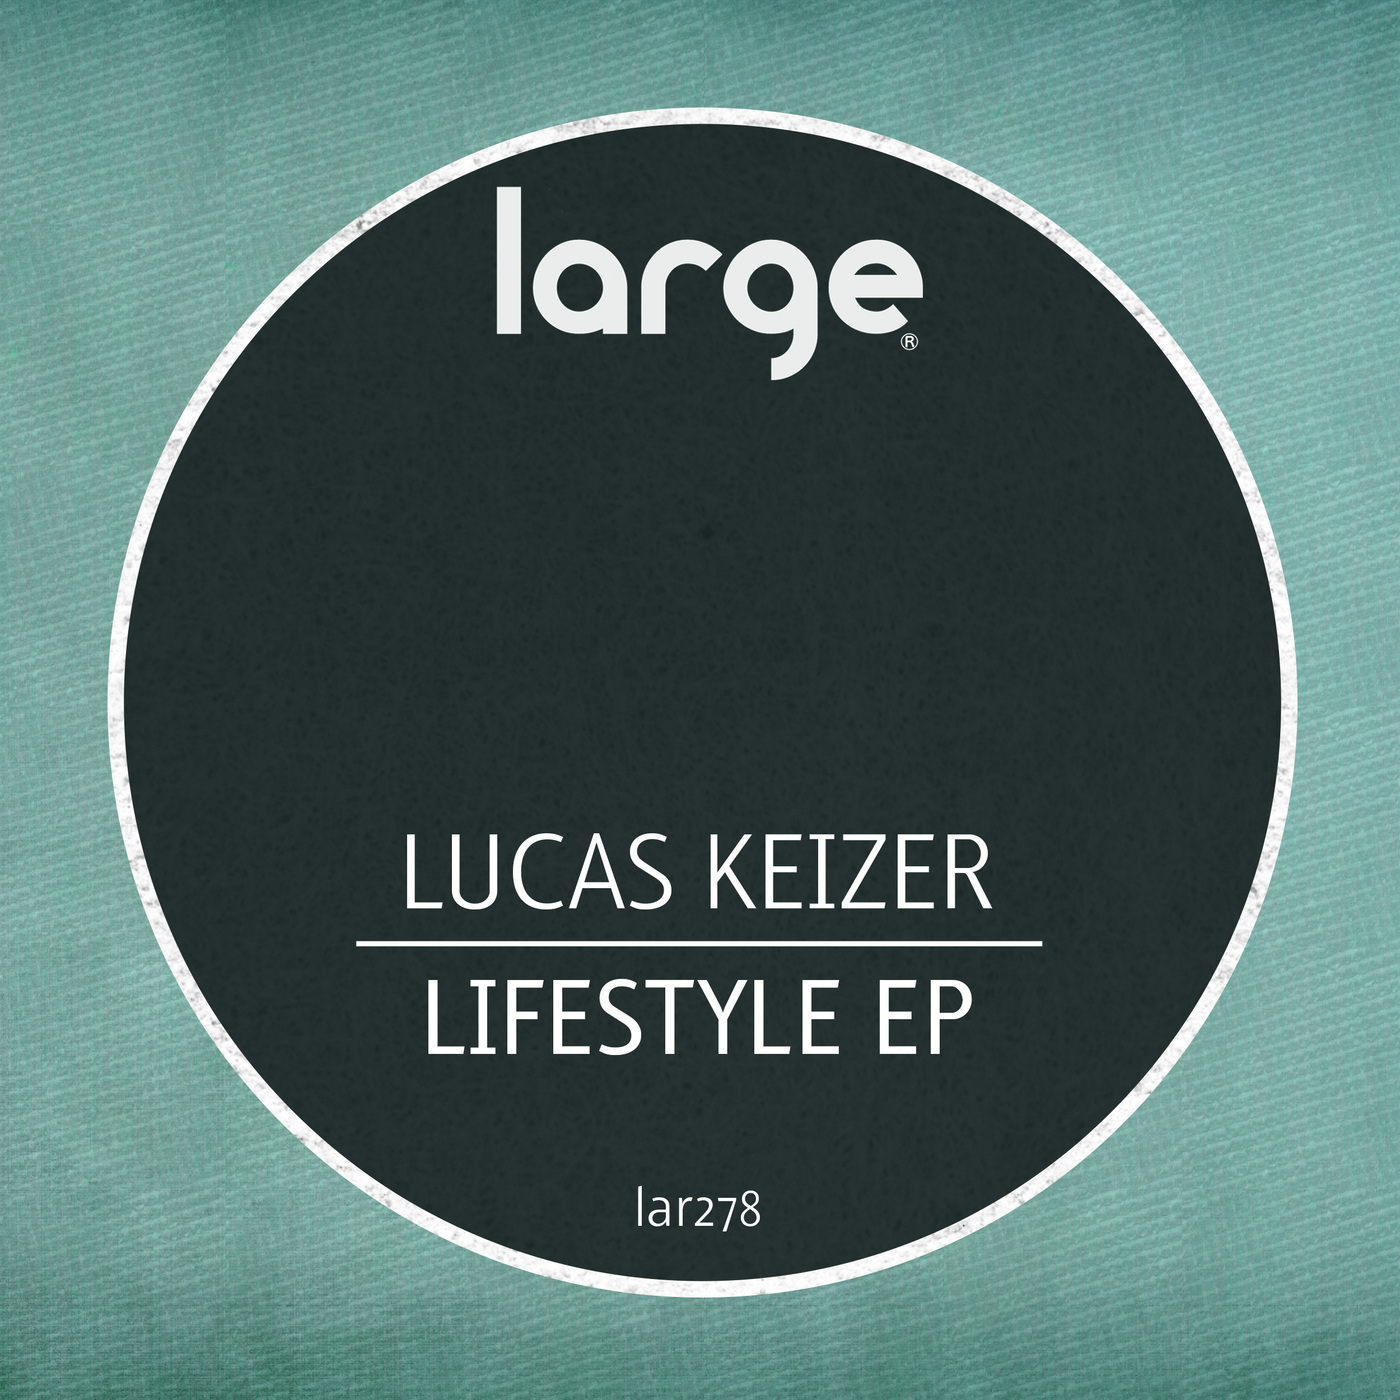 Lucas Keizer - Lifestyle EP / Large